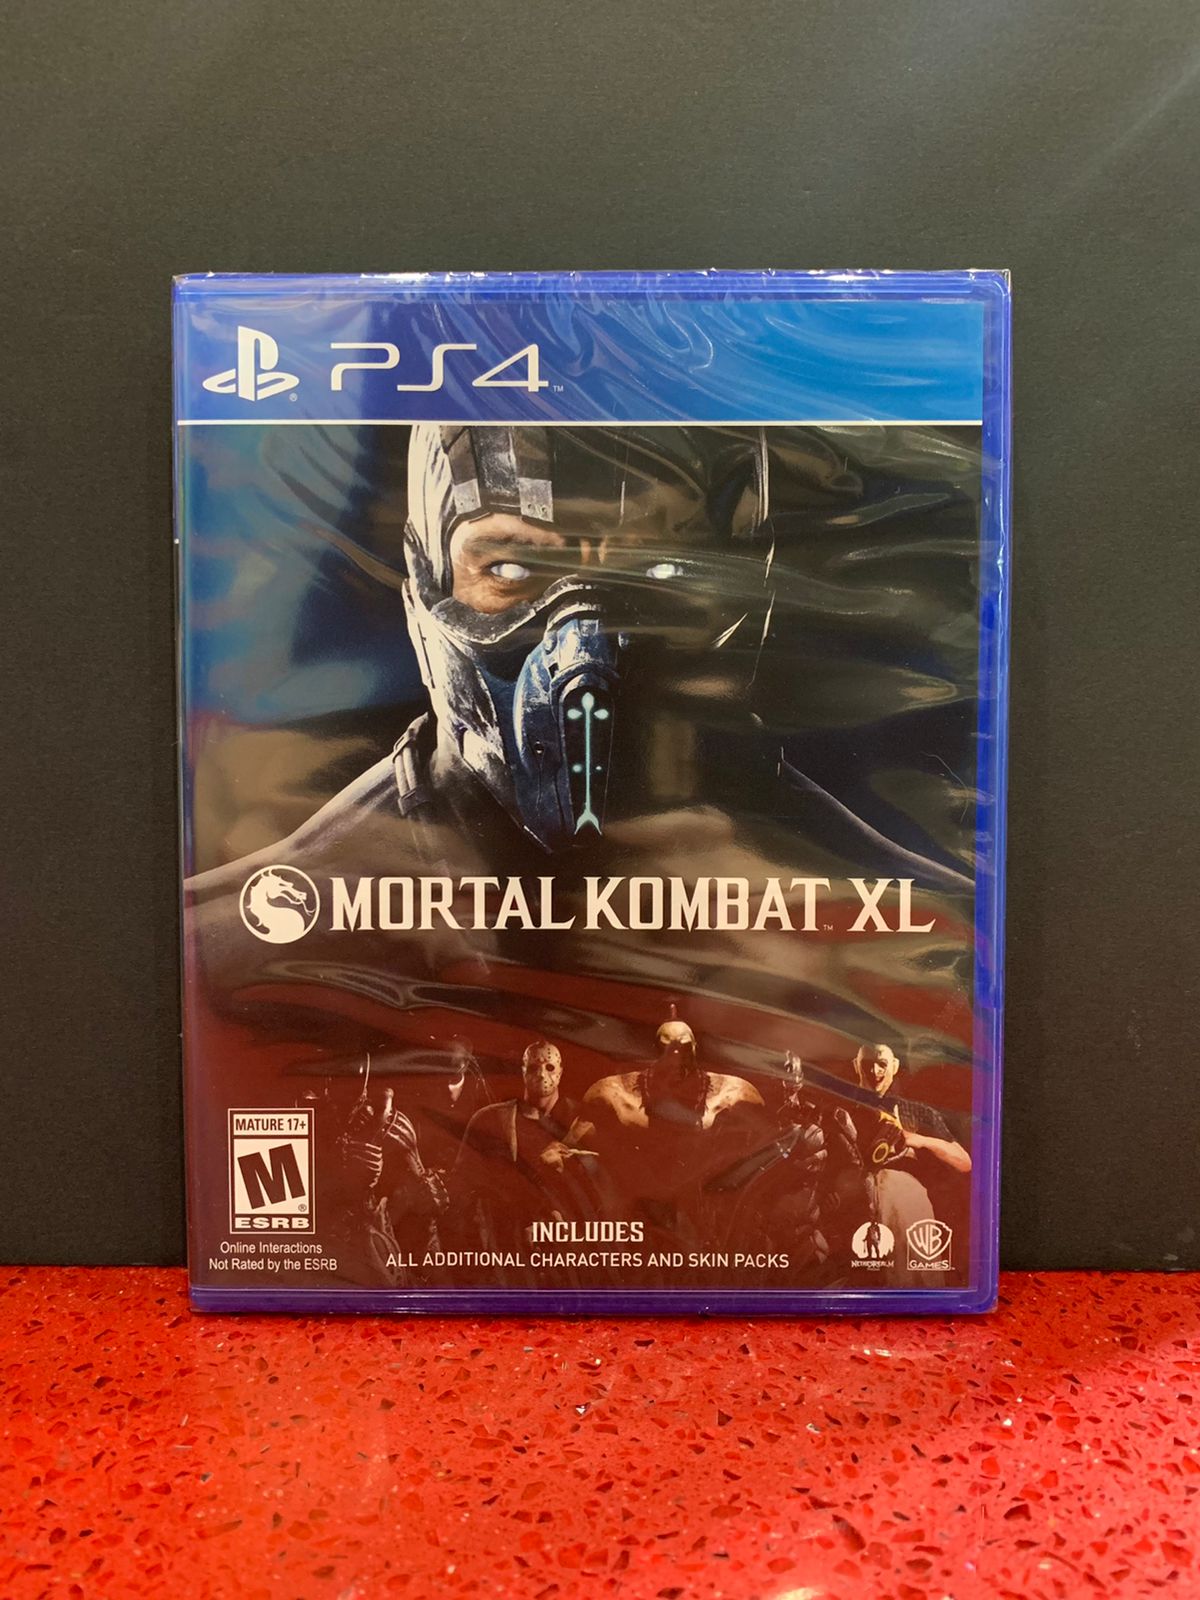 Jogo Mortal Kombat XL PS4 no Paraguai - Atacado Games - Paraguay